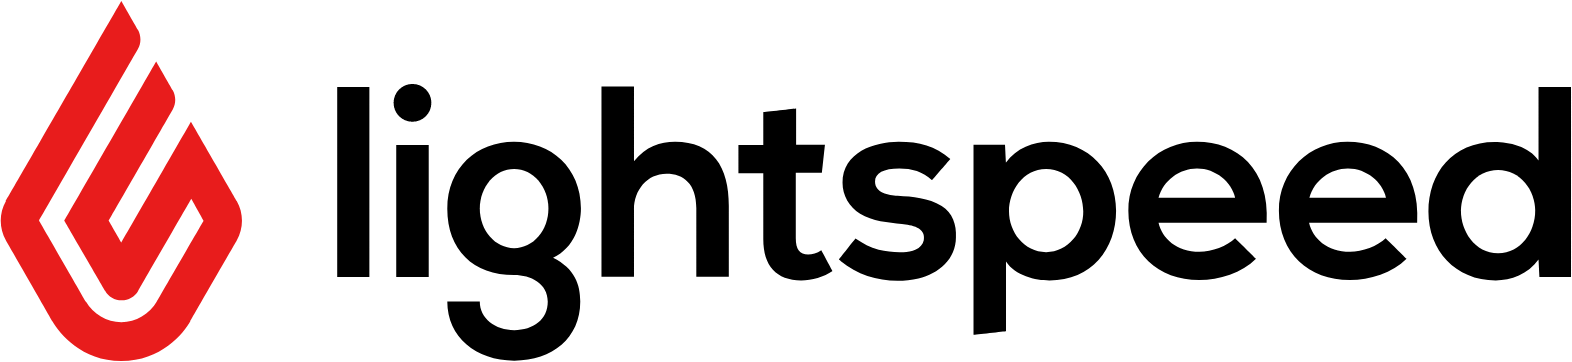 Lightspeed POS logo large (transparent PNG)